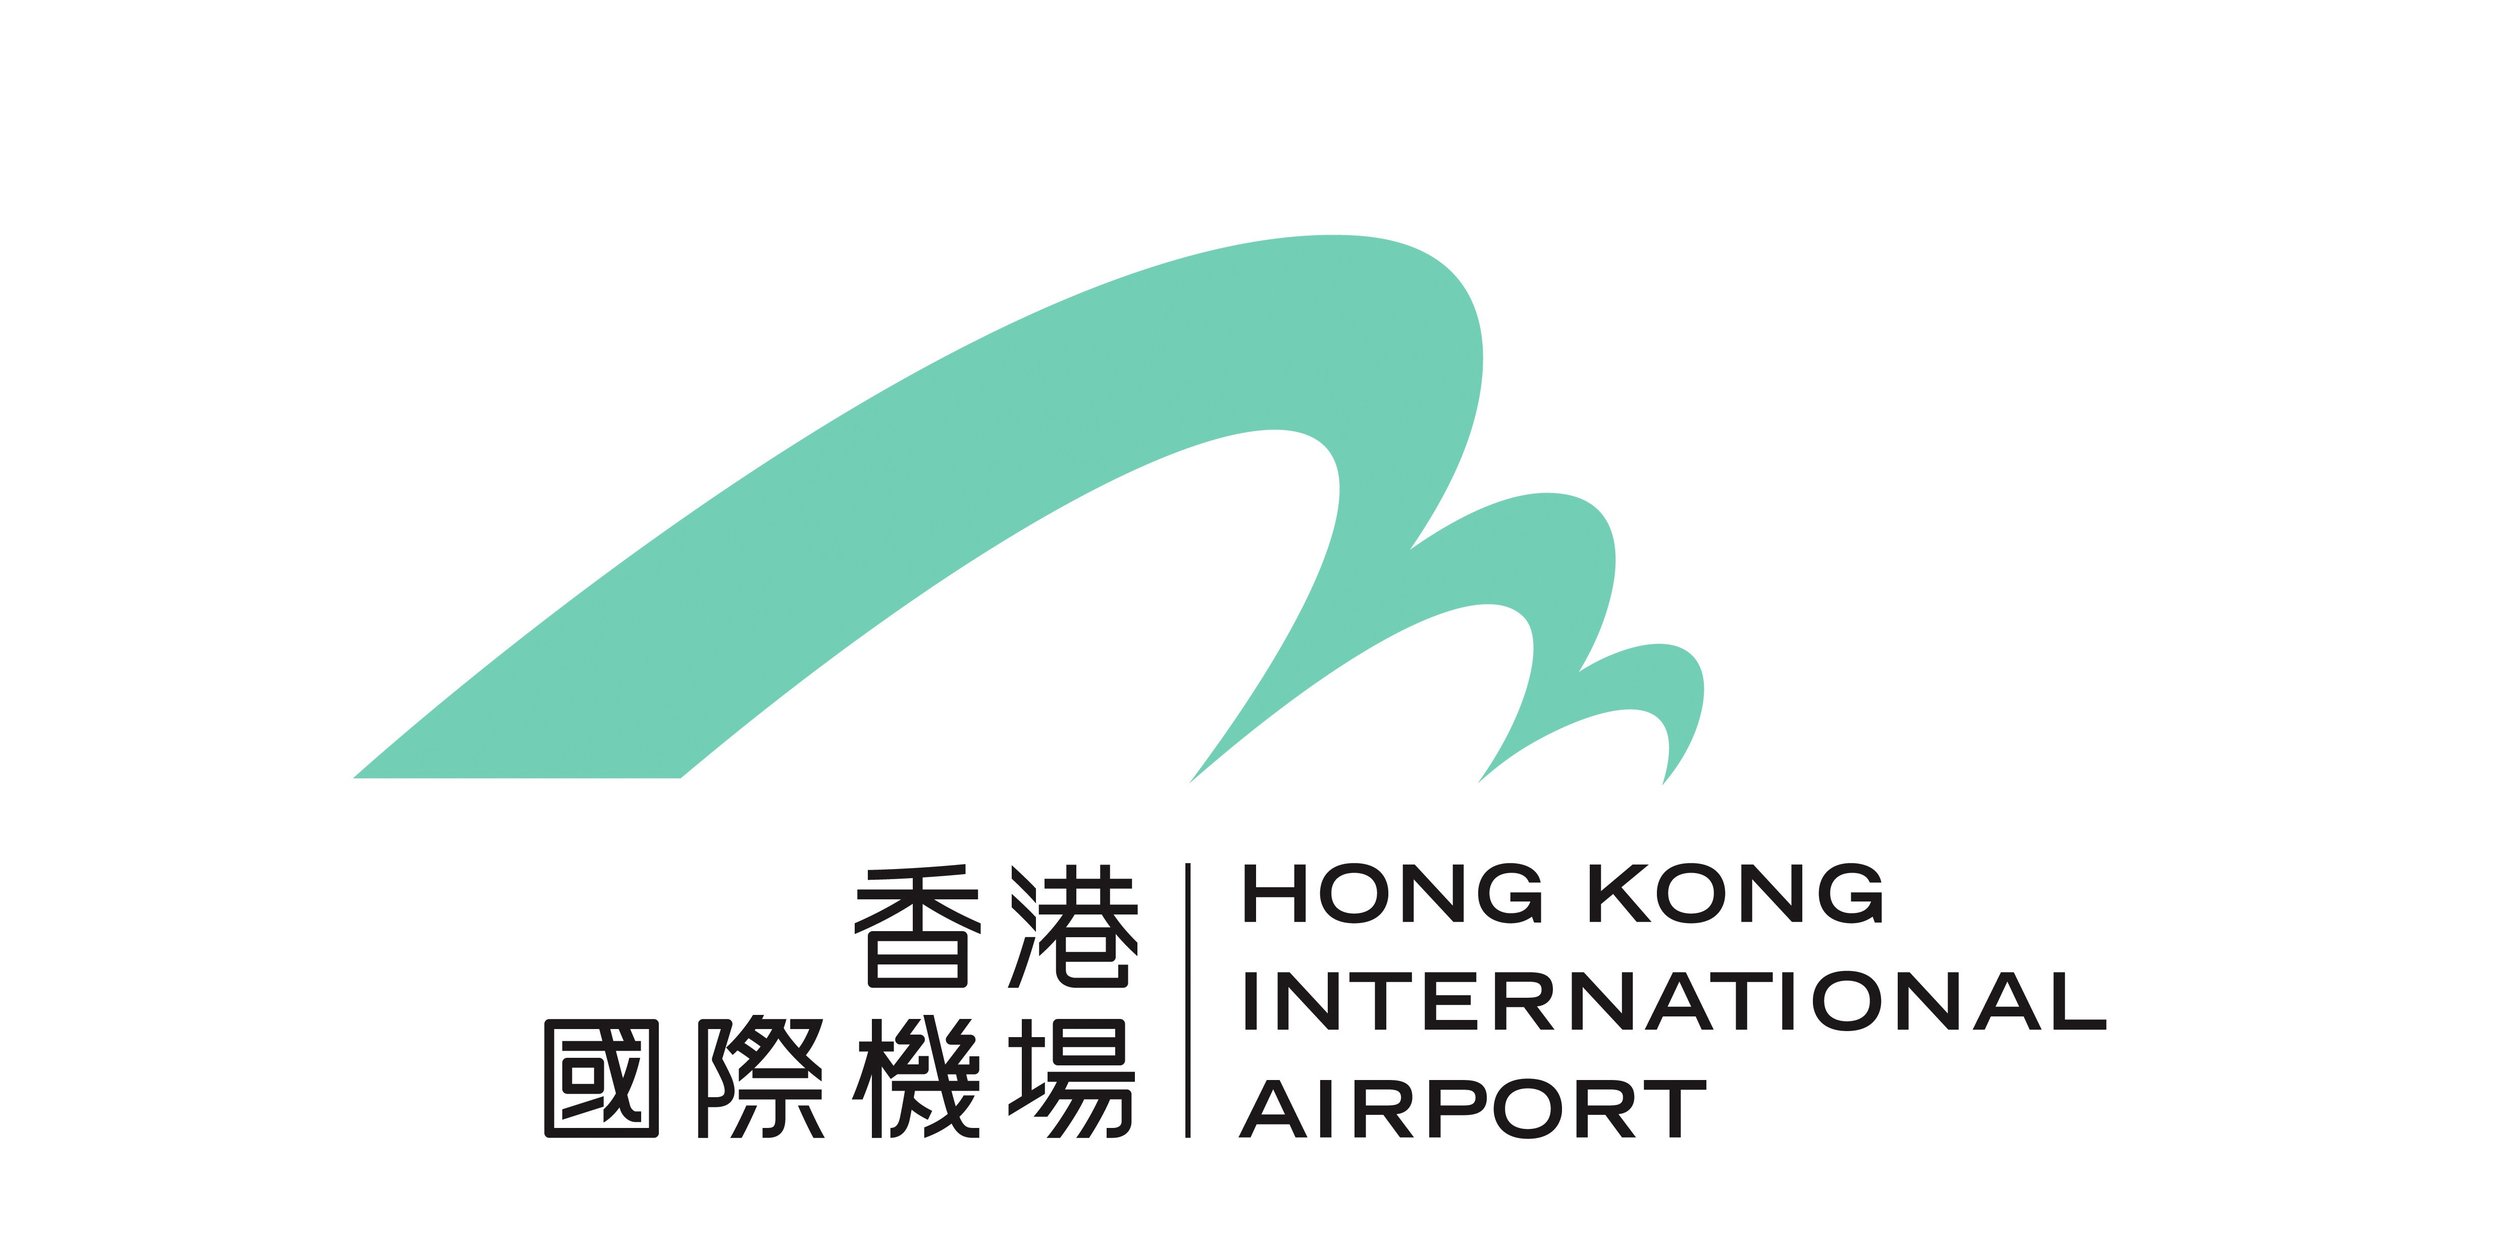 HK_Airport_New_Logo.jpg